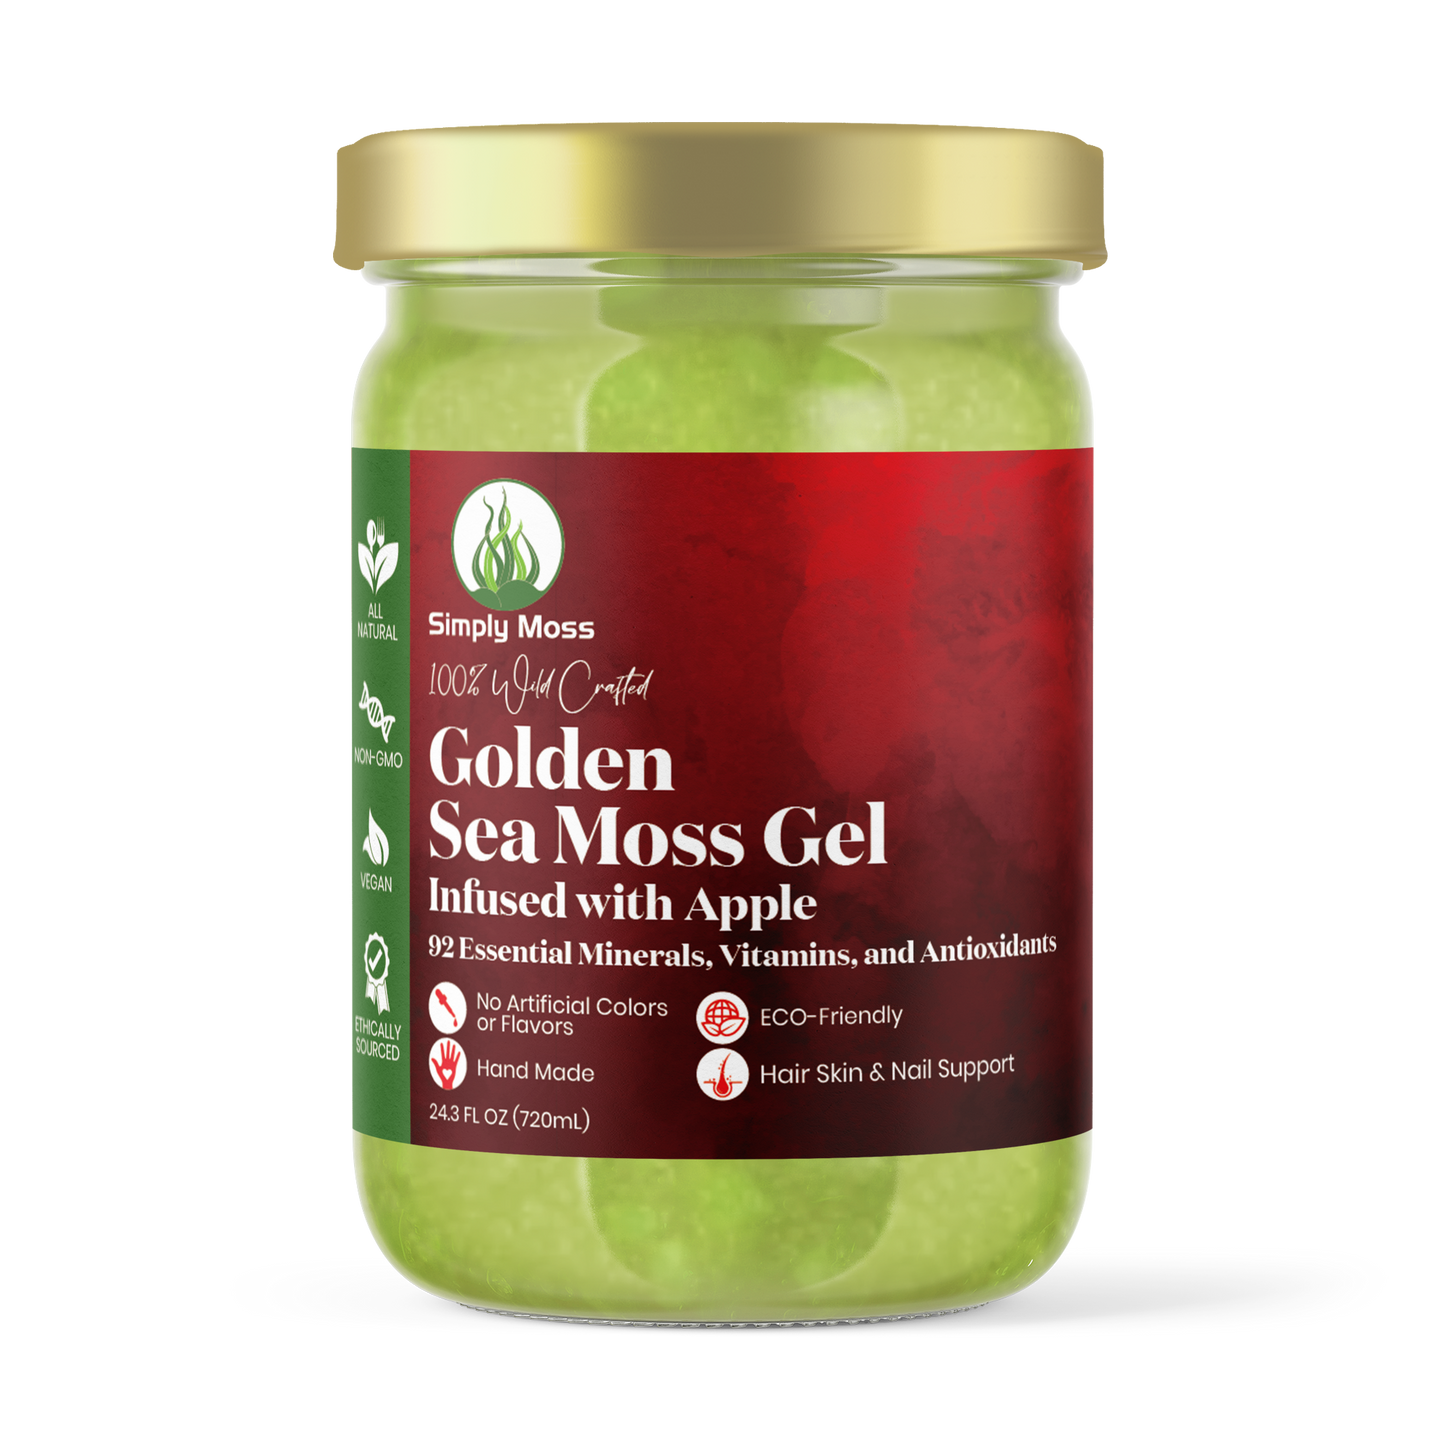 Sea Moss Gel – GoodStuff Health